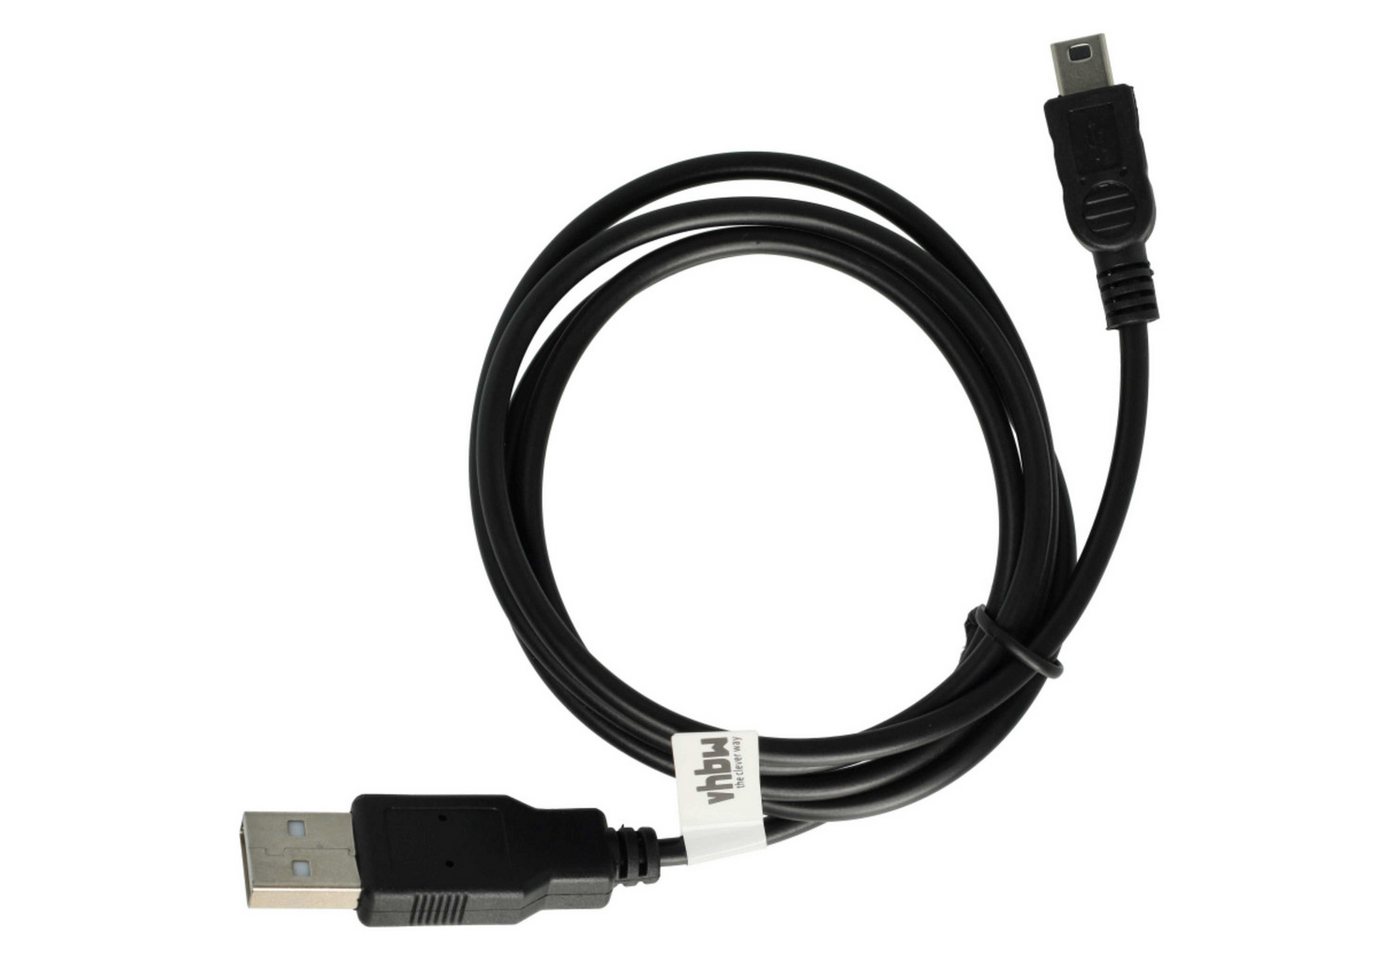 vhbw passend für Sony MiniDV DCR-PC55E, DCR-PC53E, DCR-PC9E, DCR-PC9 Kamera USB-Kabel von vhbw